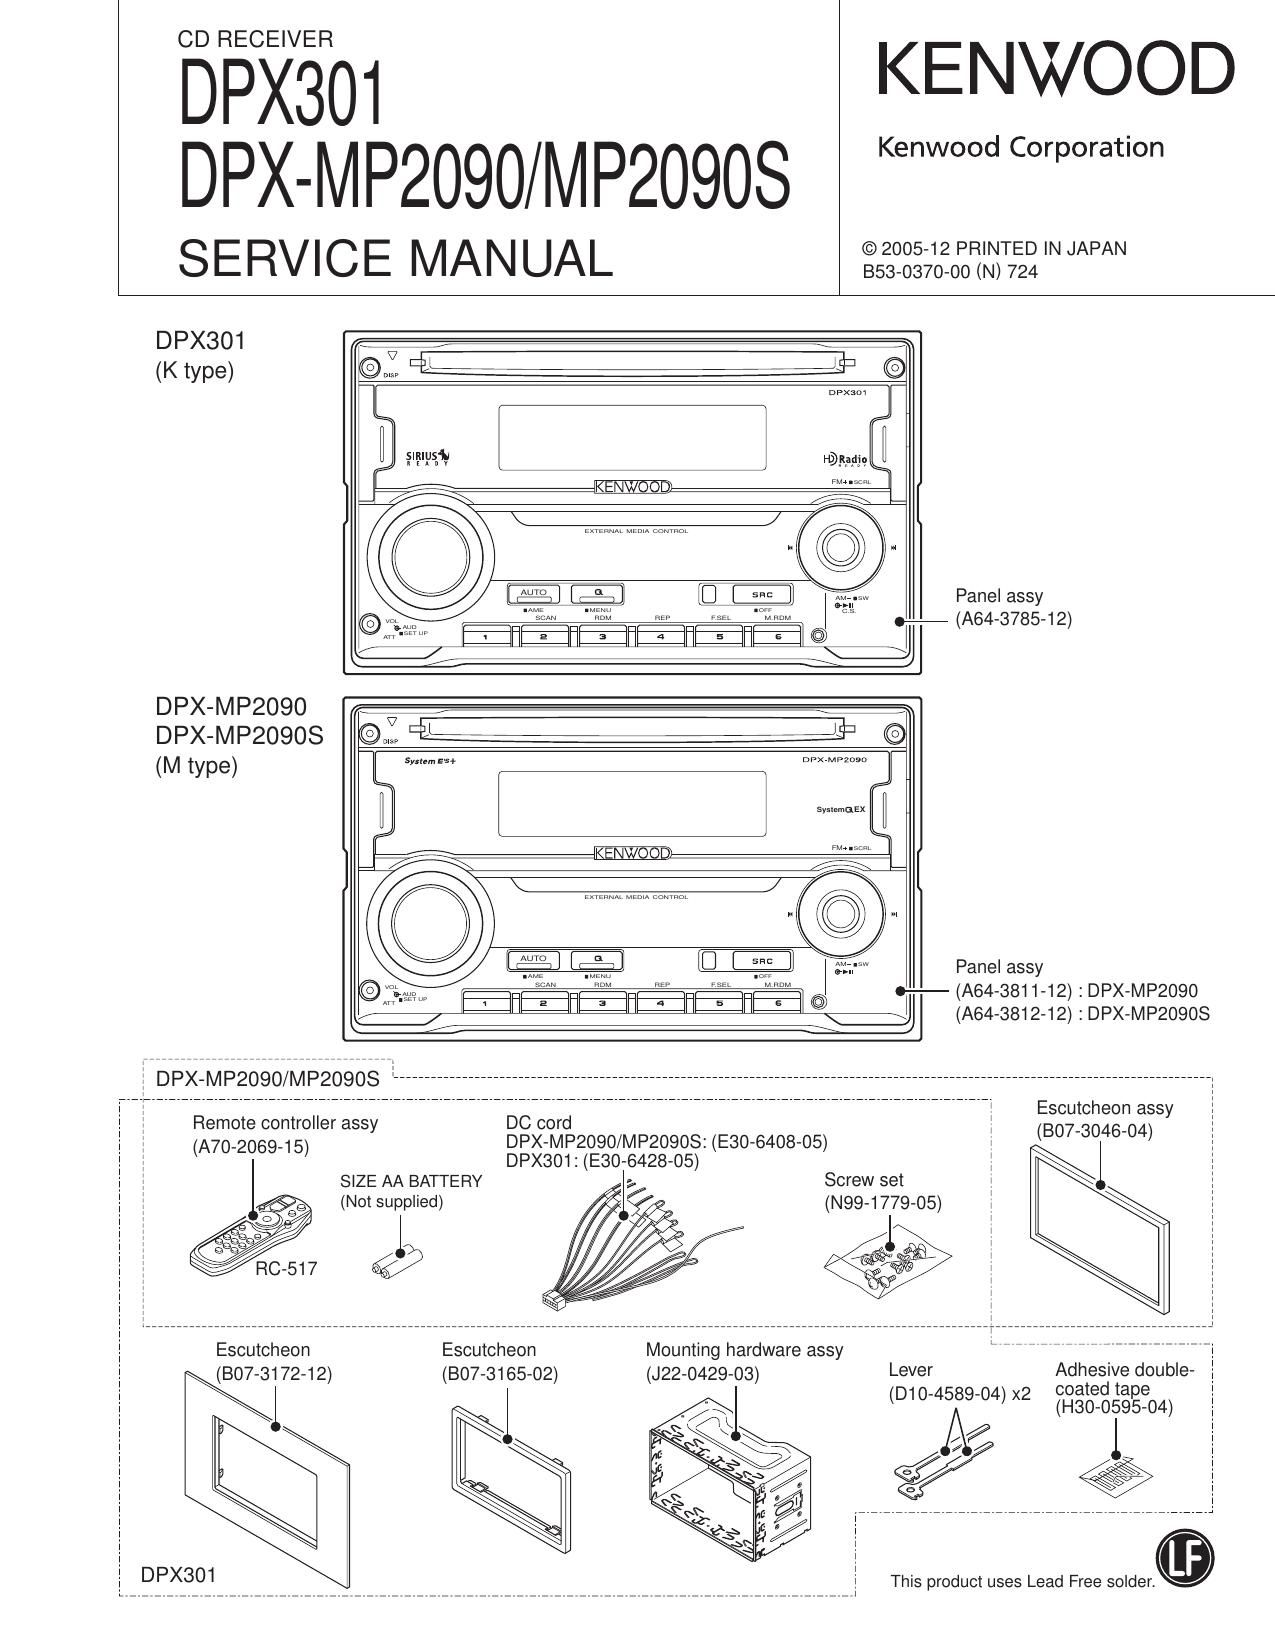 Kenwood DPX 301 Service Manual